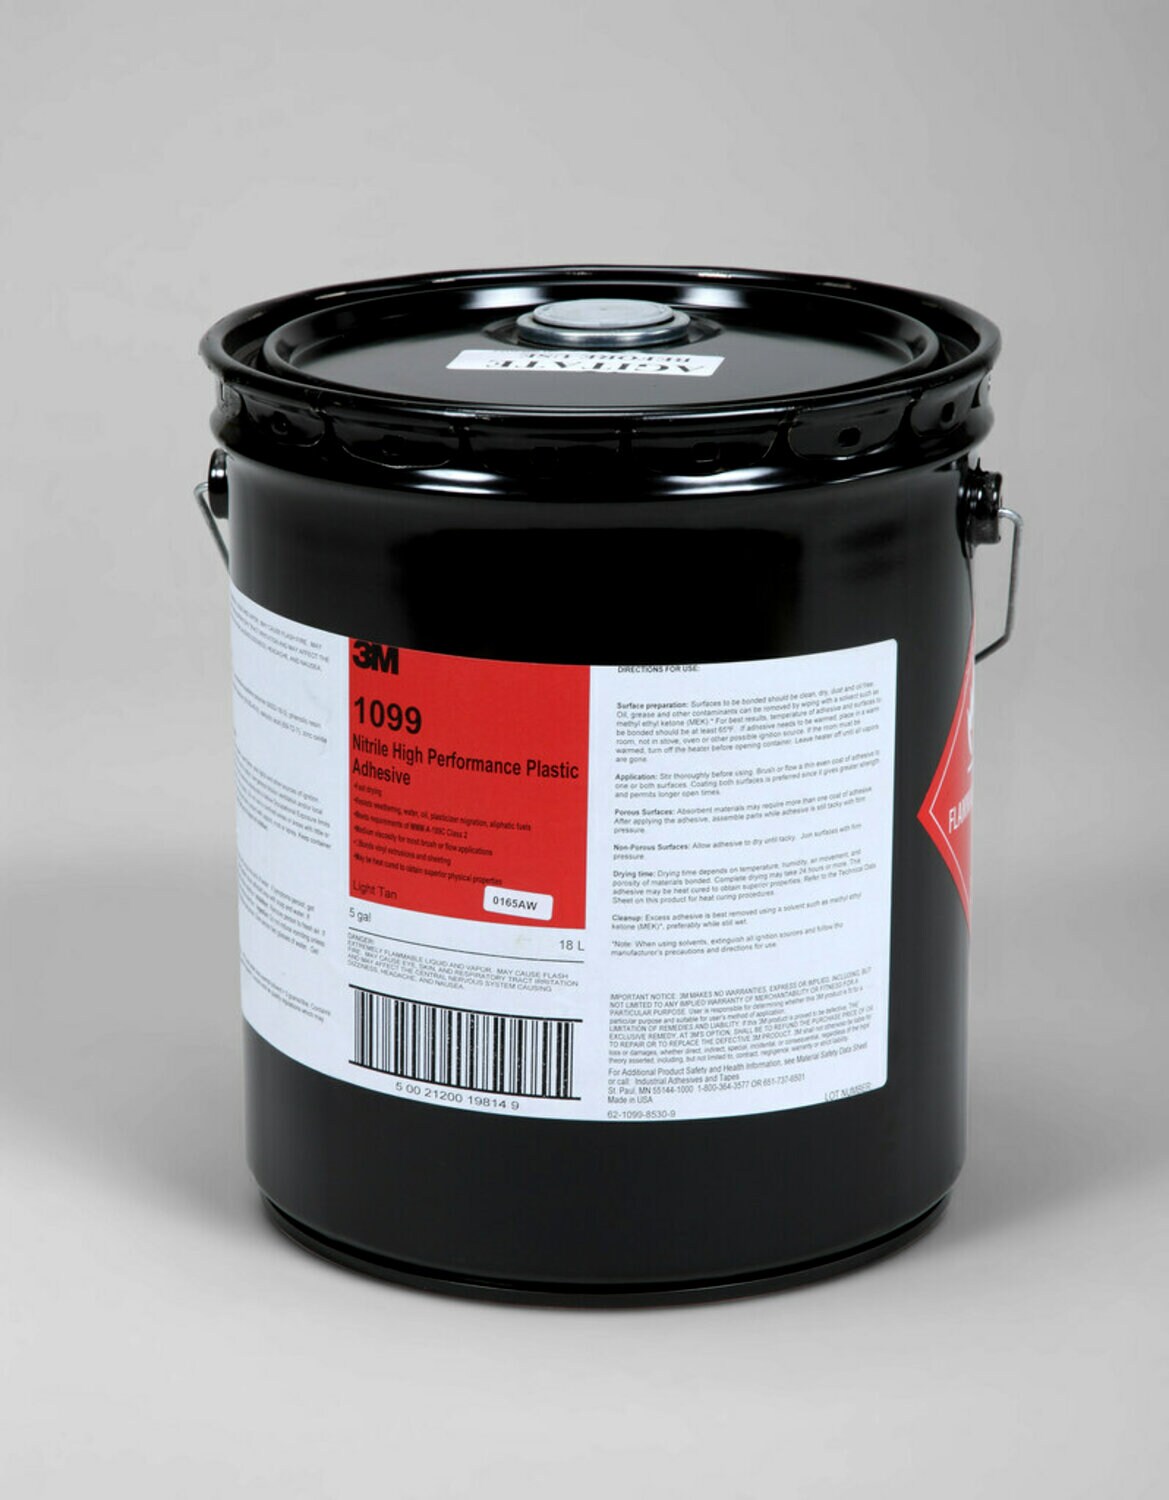 7000000798 - 3M Nitrile High Performance Plastic Adhesive 1099, Tan, 5 Gallon Drum
(Pail)